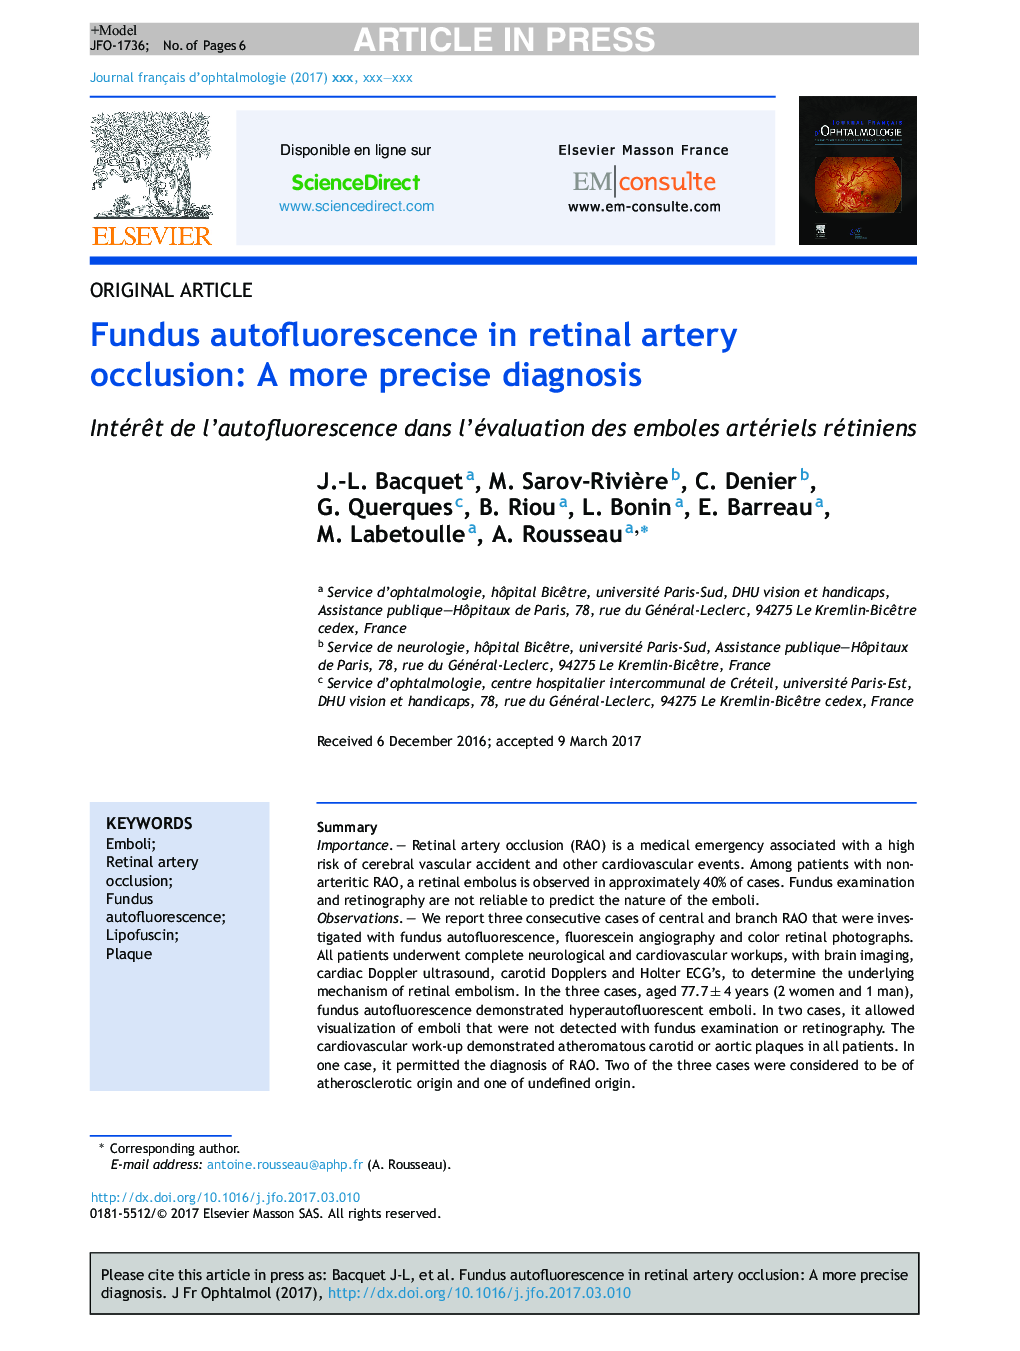 Fundus autofluorescence in retinal artery occlusion: A more precise diagnosis